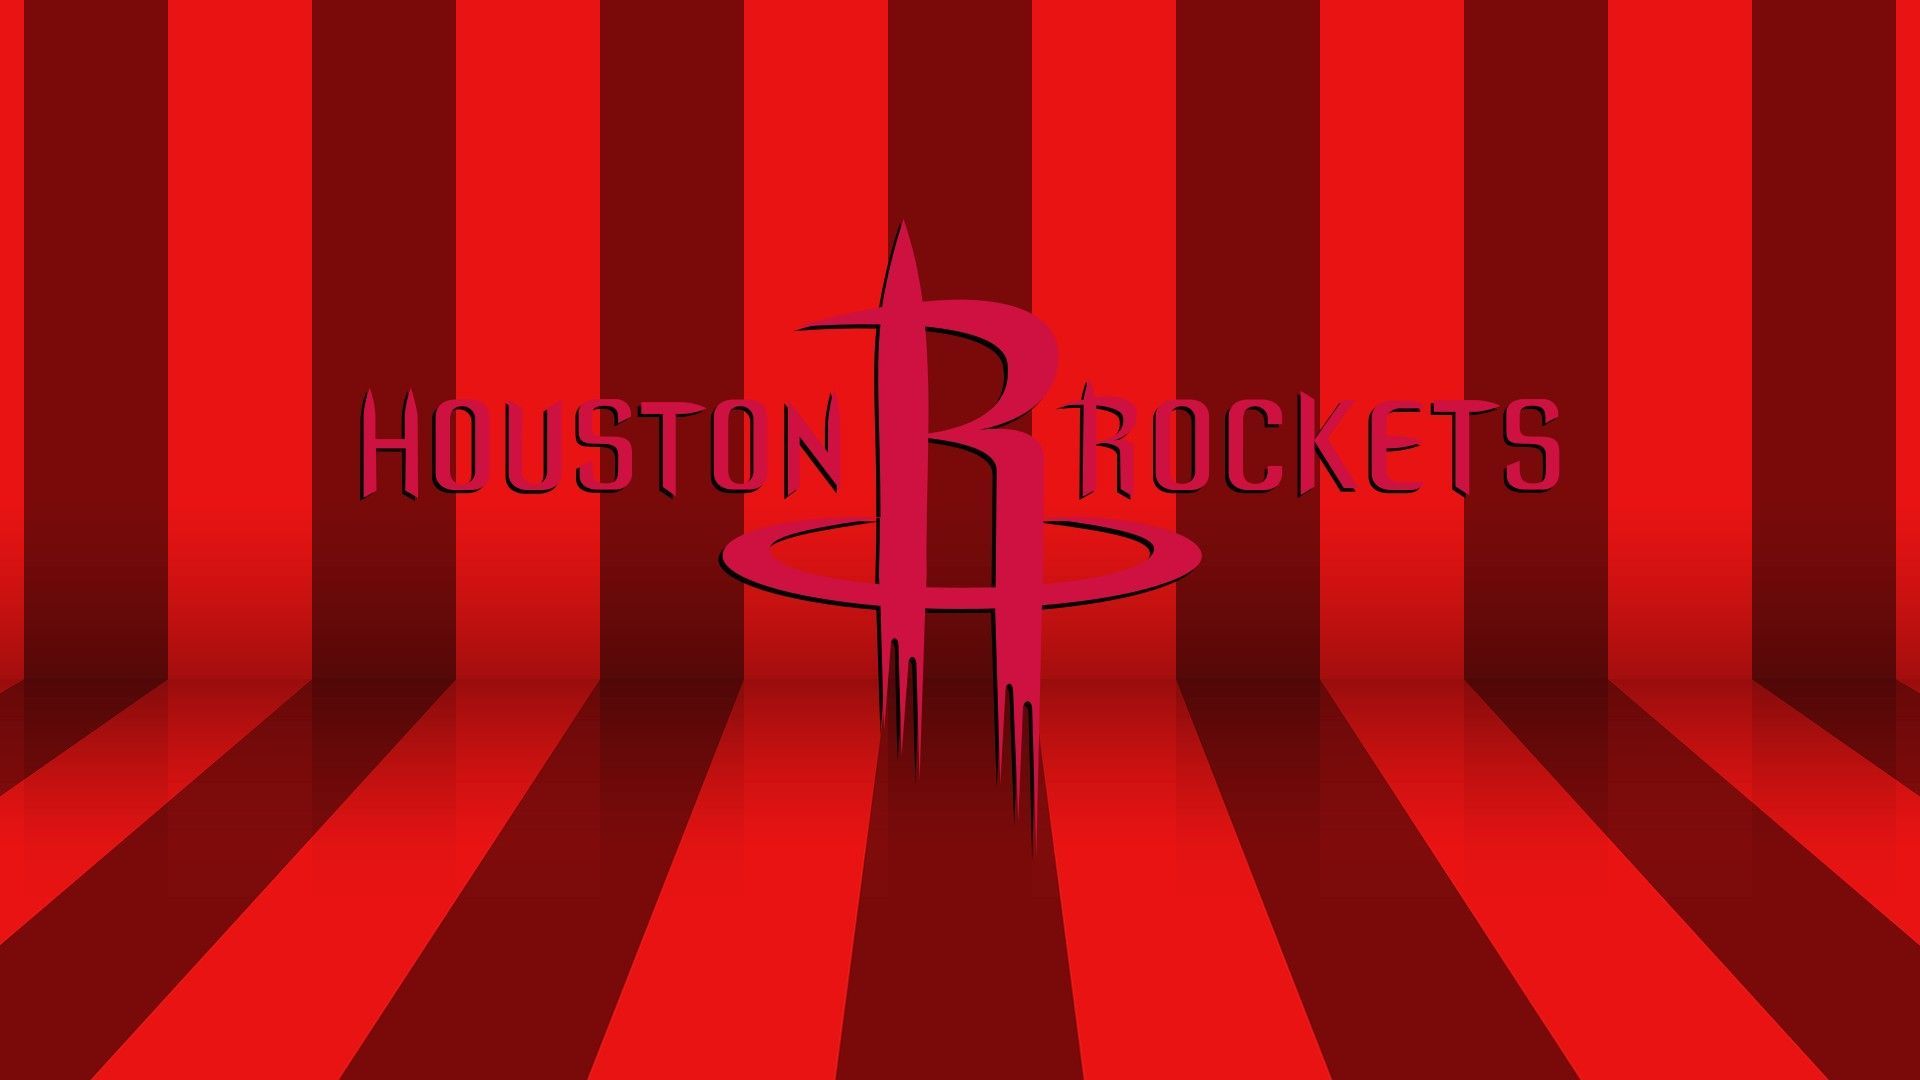 BACKGROUNDS HOUSTON ROCKETS HD. Houston rockets, Basketball wallpaper, Basketball wallpaper hd